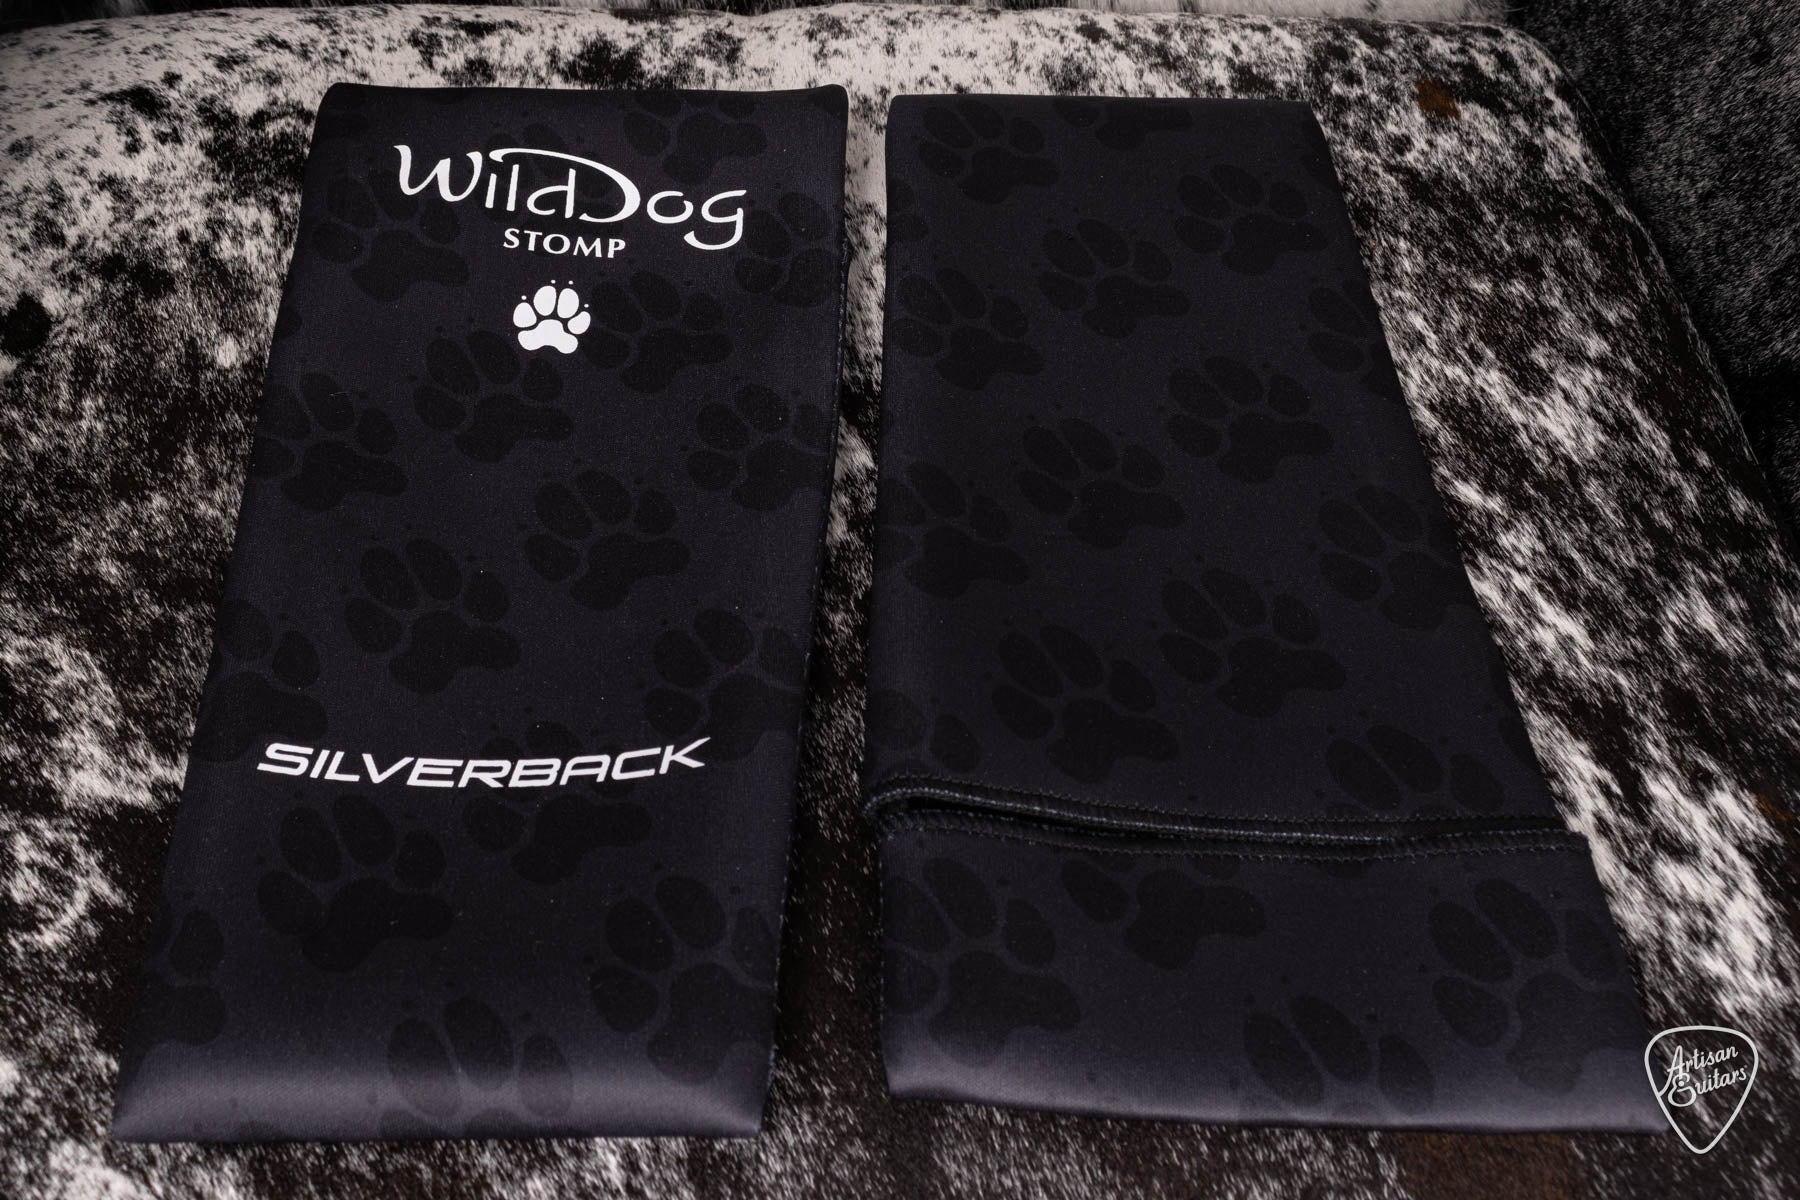 Wild Dog Silverback Stomp Box with Jingles - 16671